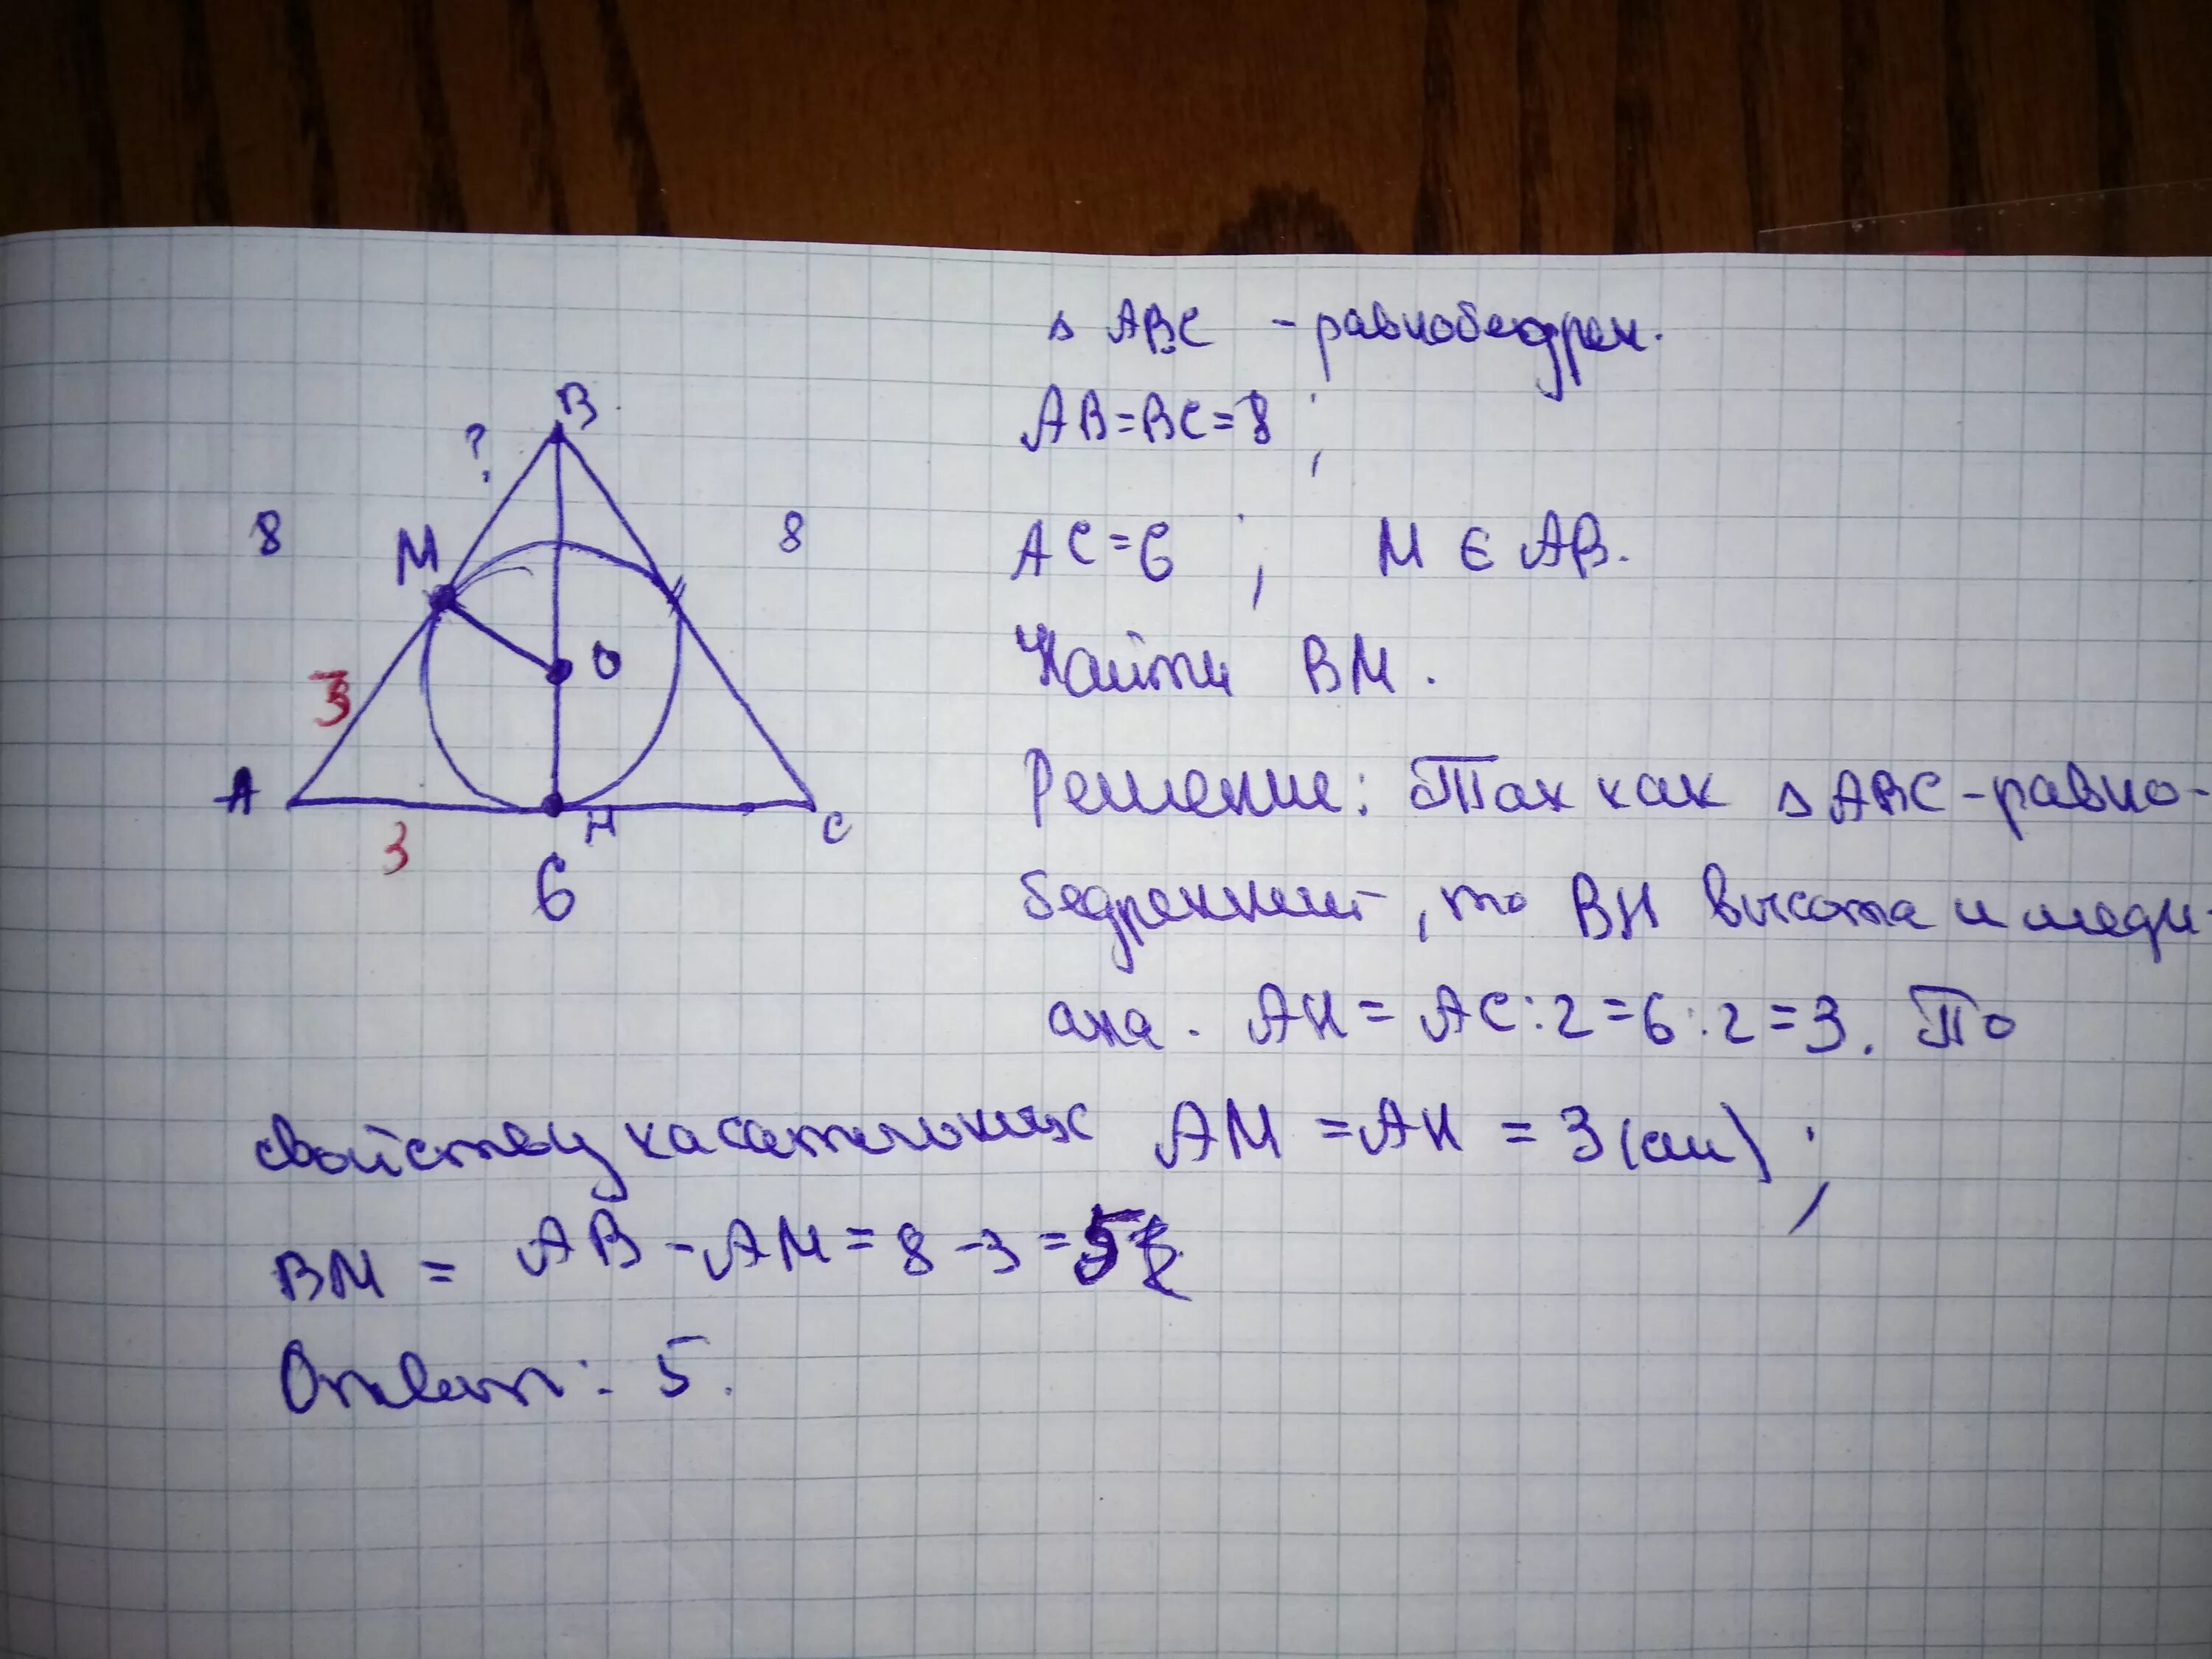 Известно что ас бс аб 10. В треугольнике ABC AC BC ab 8. Дано треугольник ABC ab BC. Окружность вписанная в треугольник ab=BC=AC=12. В треугольнике АБС аб<BC<AC.